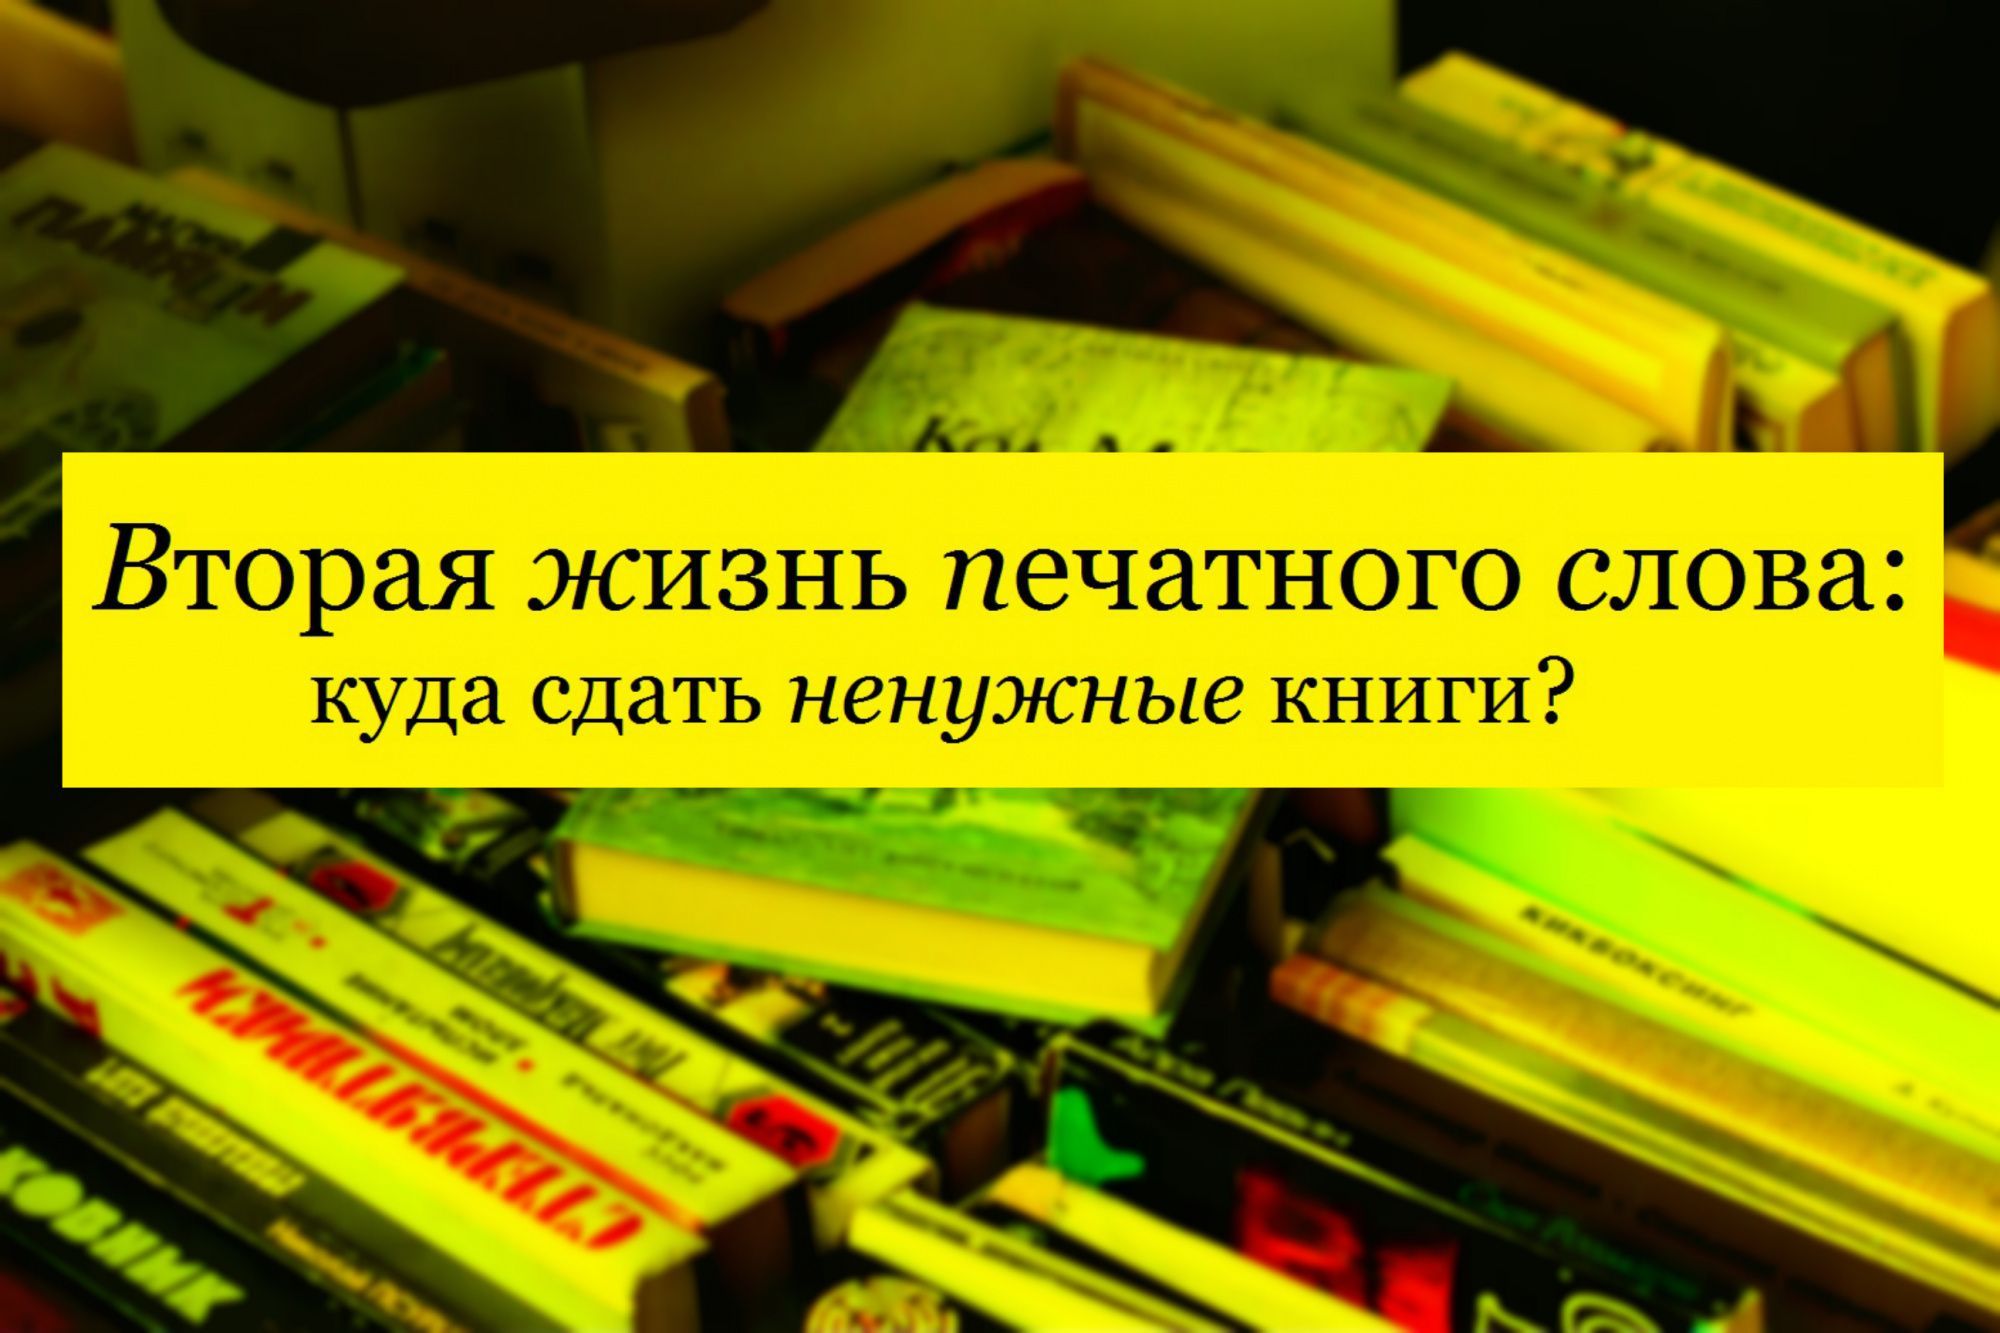 Откуда можно книги. Куда сдать старые книги. Сдать старые книги. Куда можно сдать книги. Куда сдать ненужные книги.